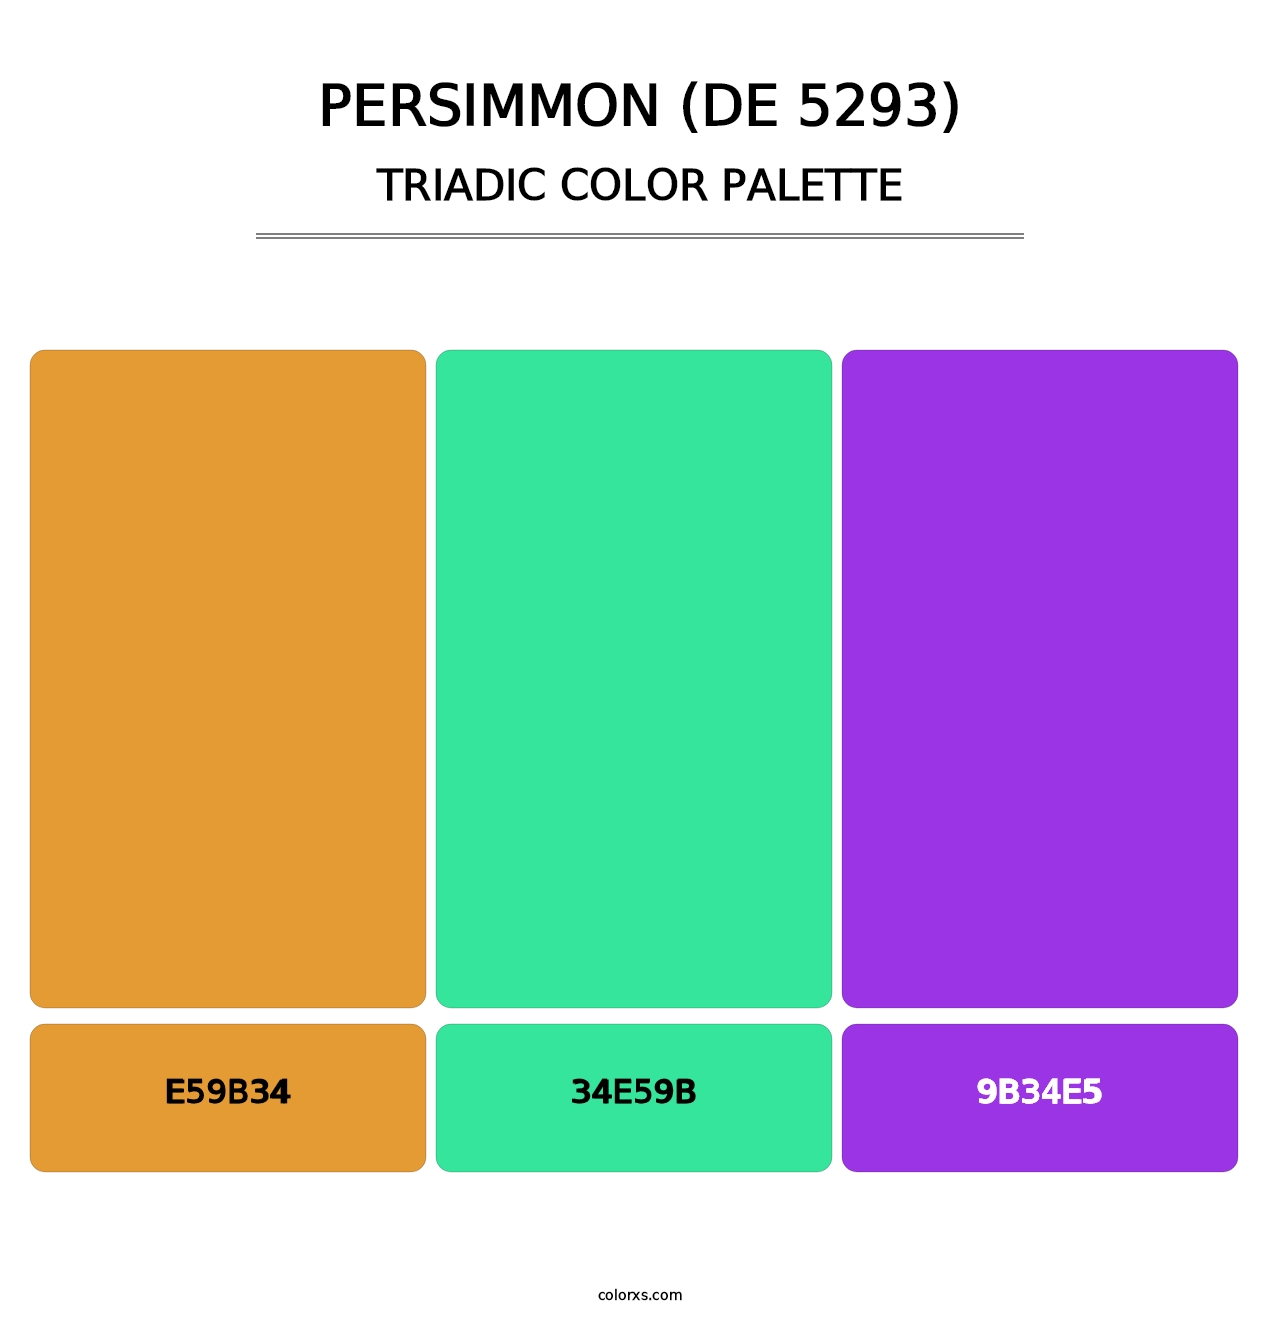 Persimmon (DE 5293) - Triadic Color Palette